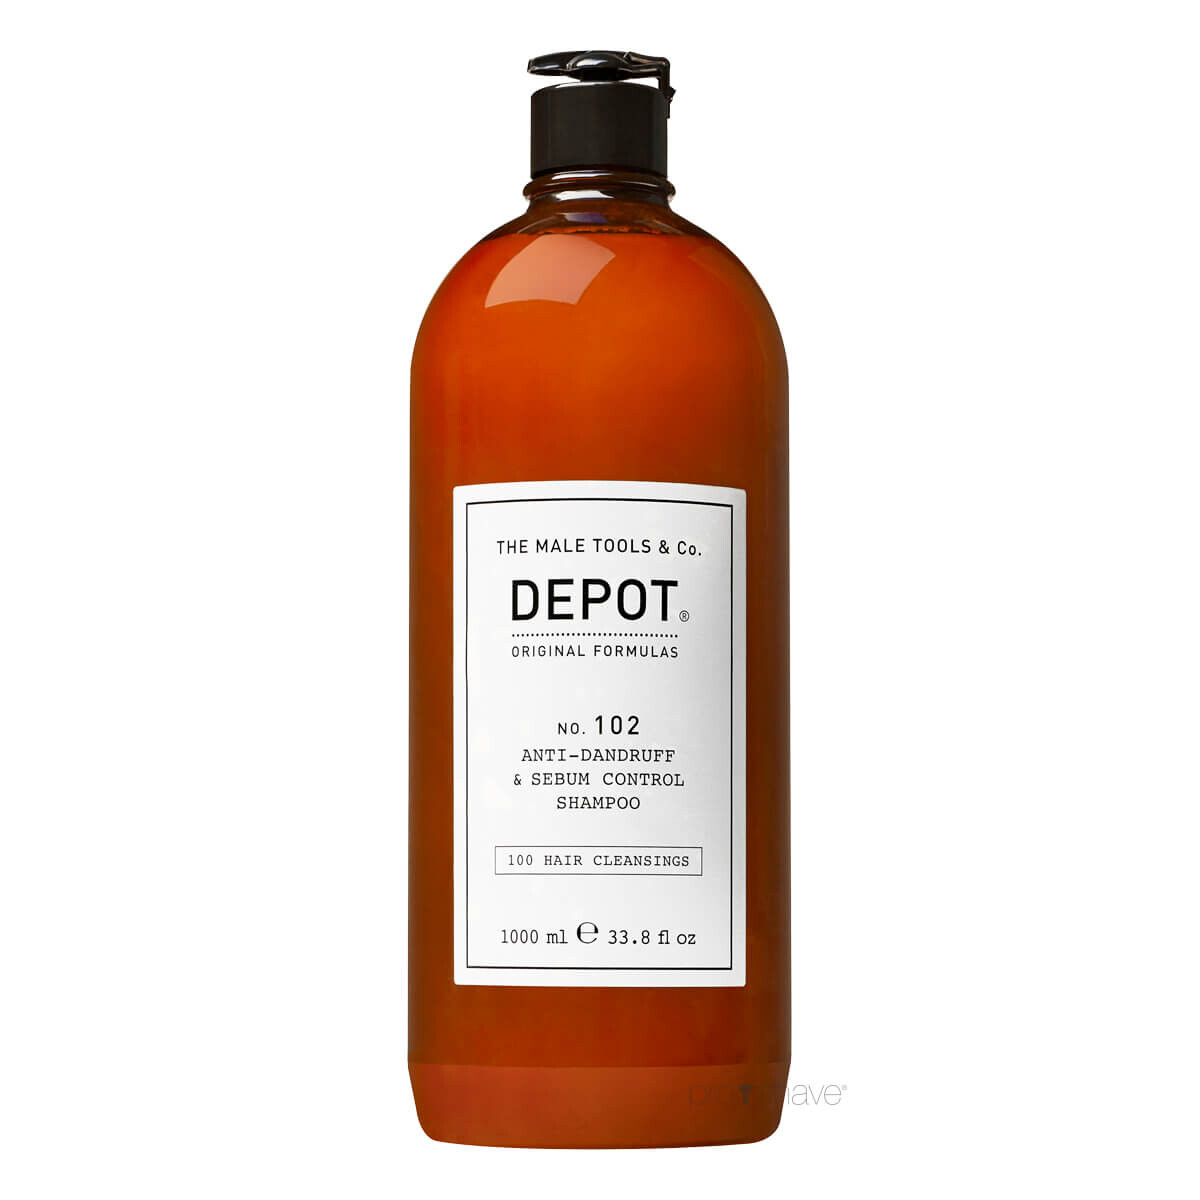 Se Depot Anti-Dandruff & Sebum Control Shampoo, No. 102, 1000 ml. hos Proshave